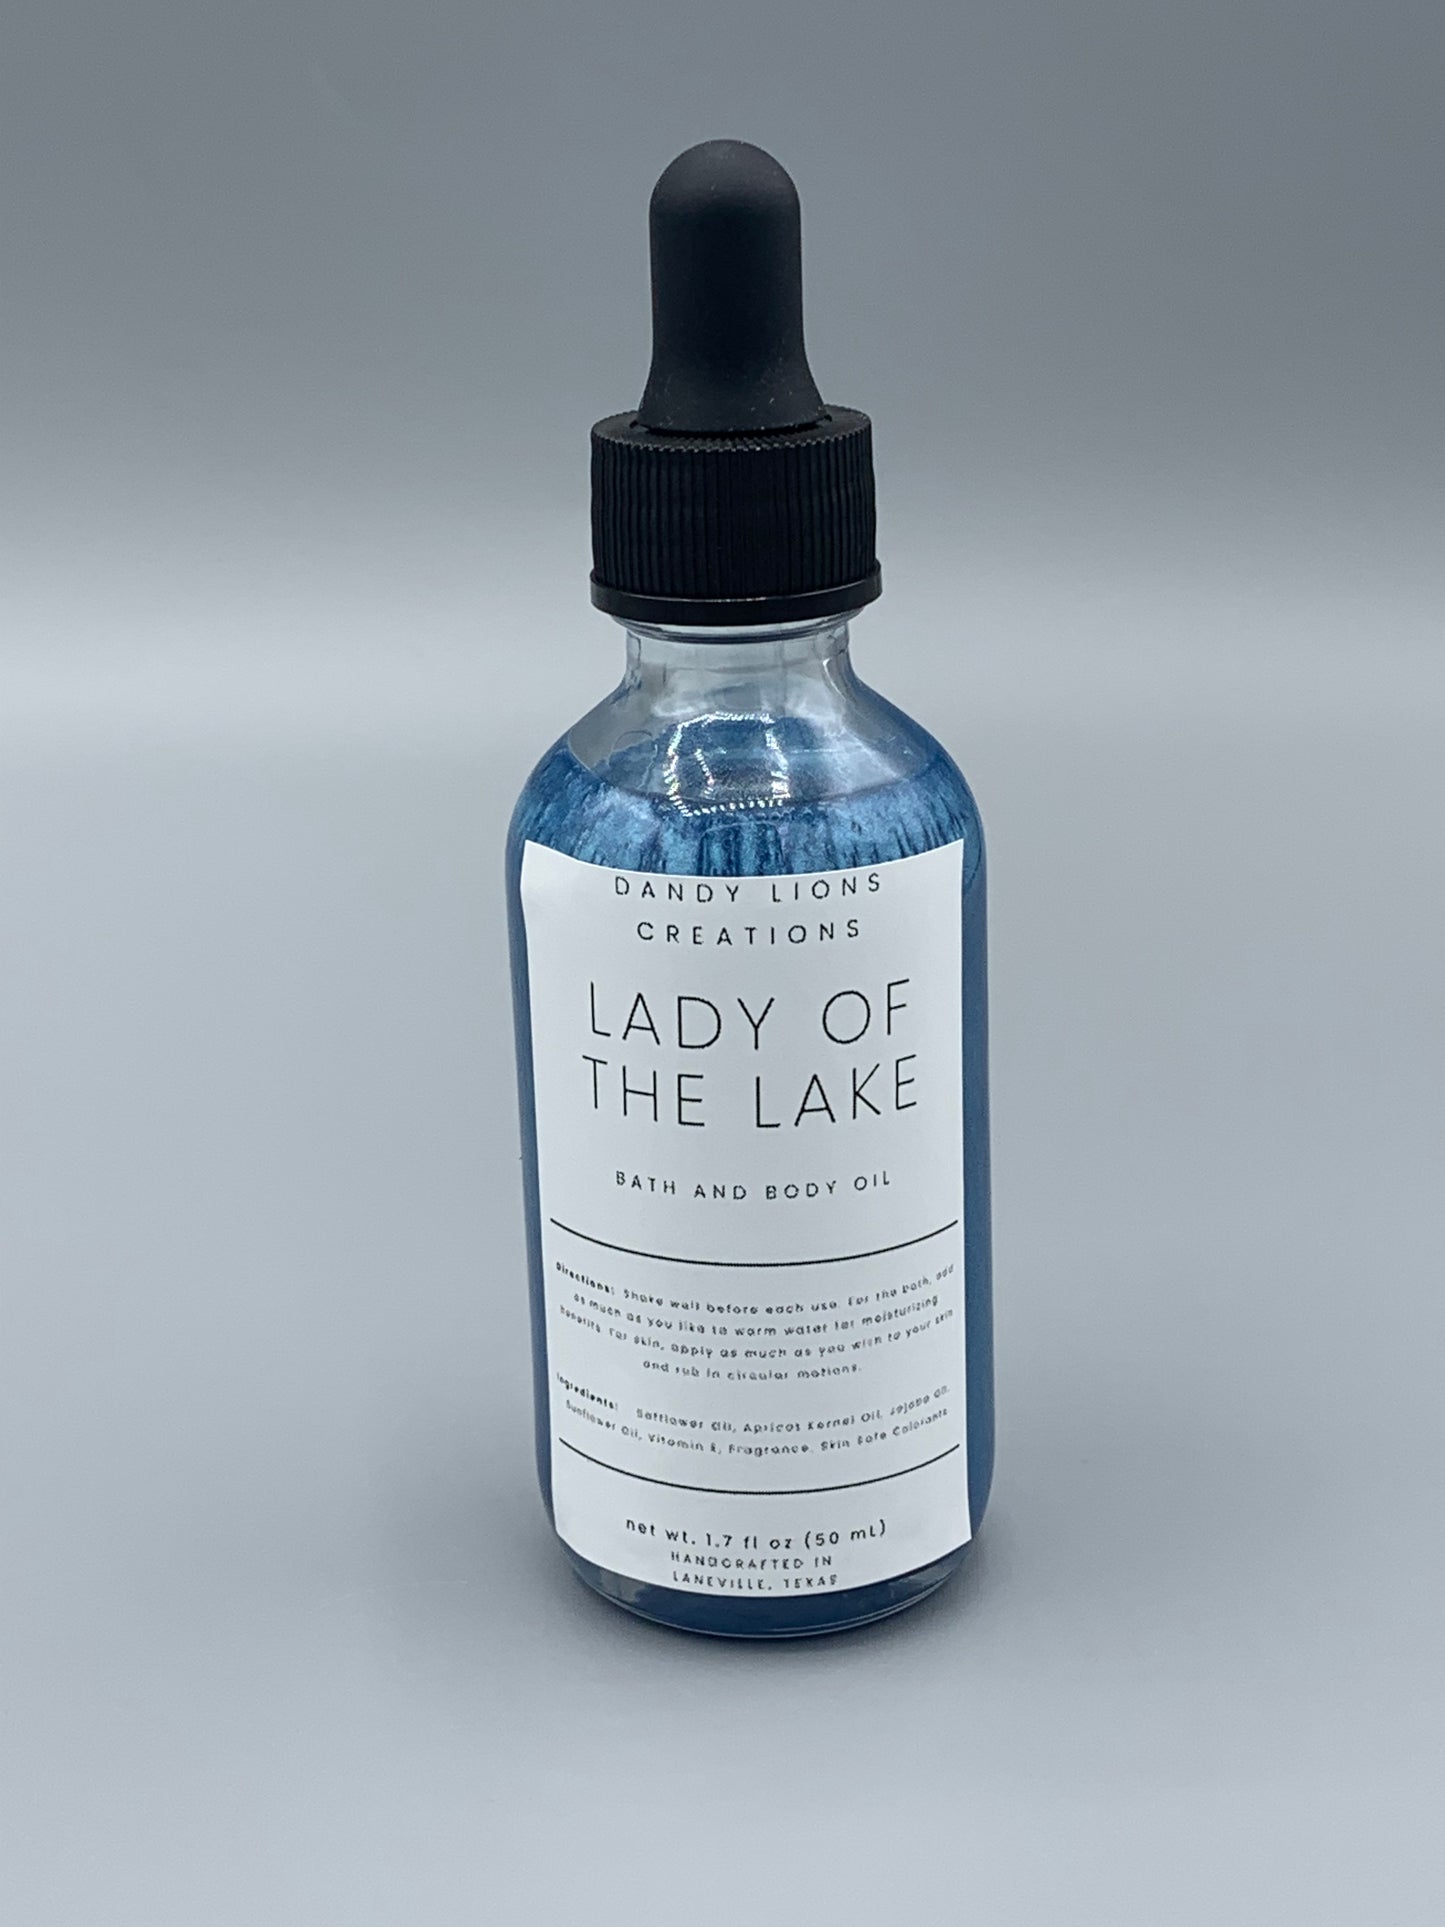 Lady of the Lake bath & body oil